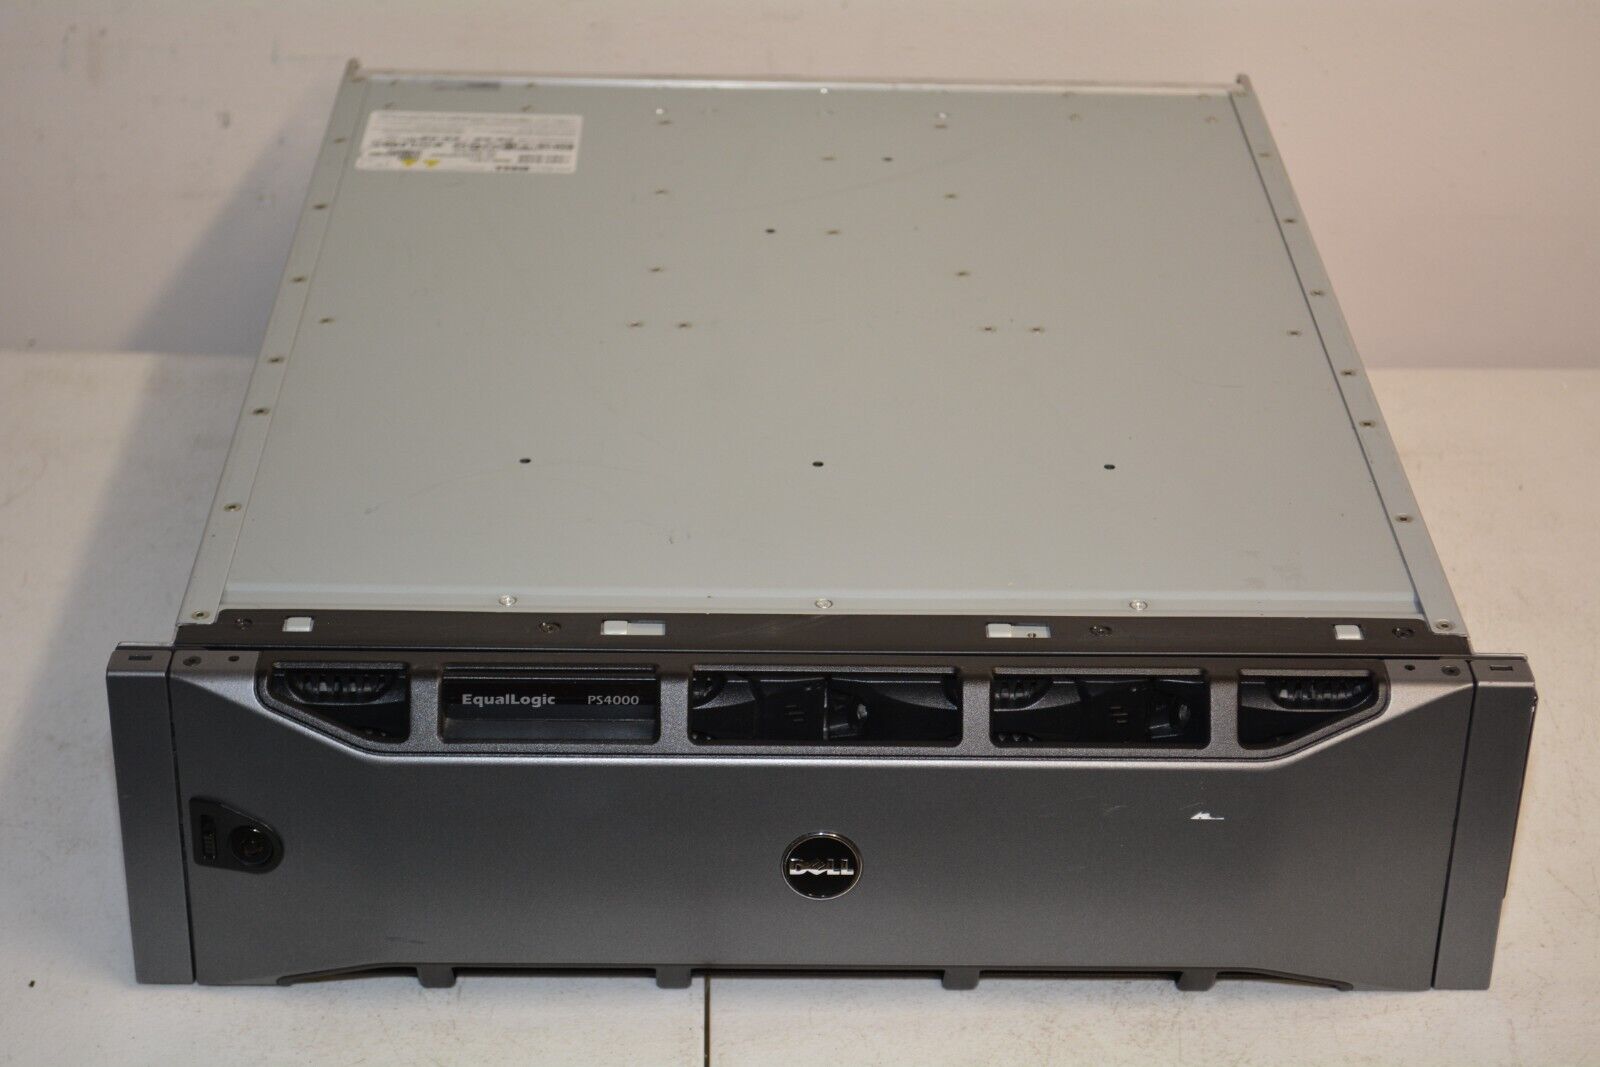 ^ Dell EqualLogic PS4000 Storage Array 2x Type 8 Control Module 2x PSU No HDs